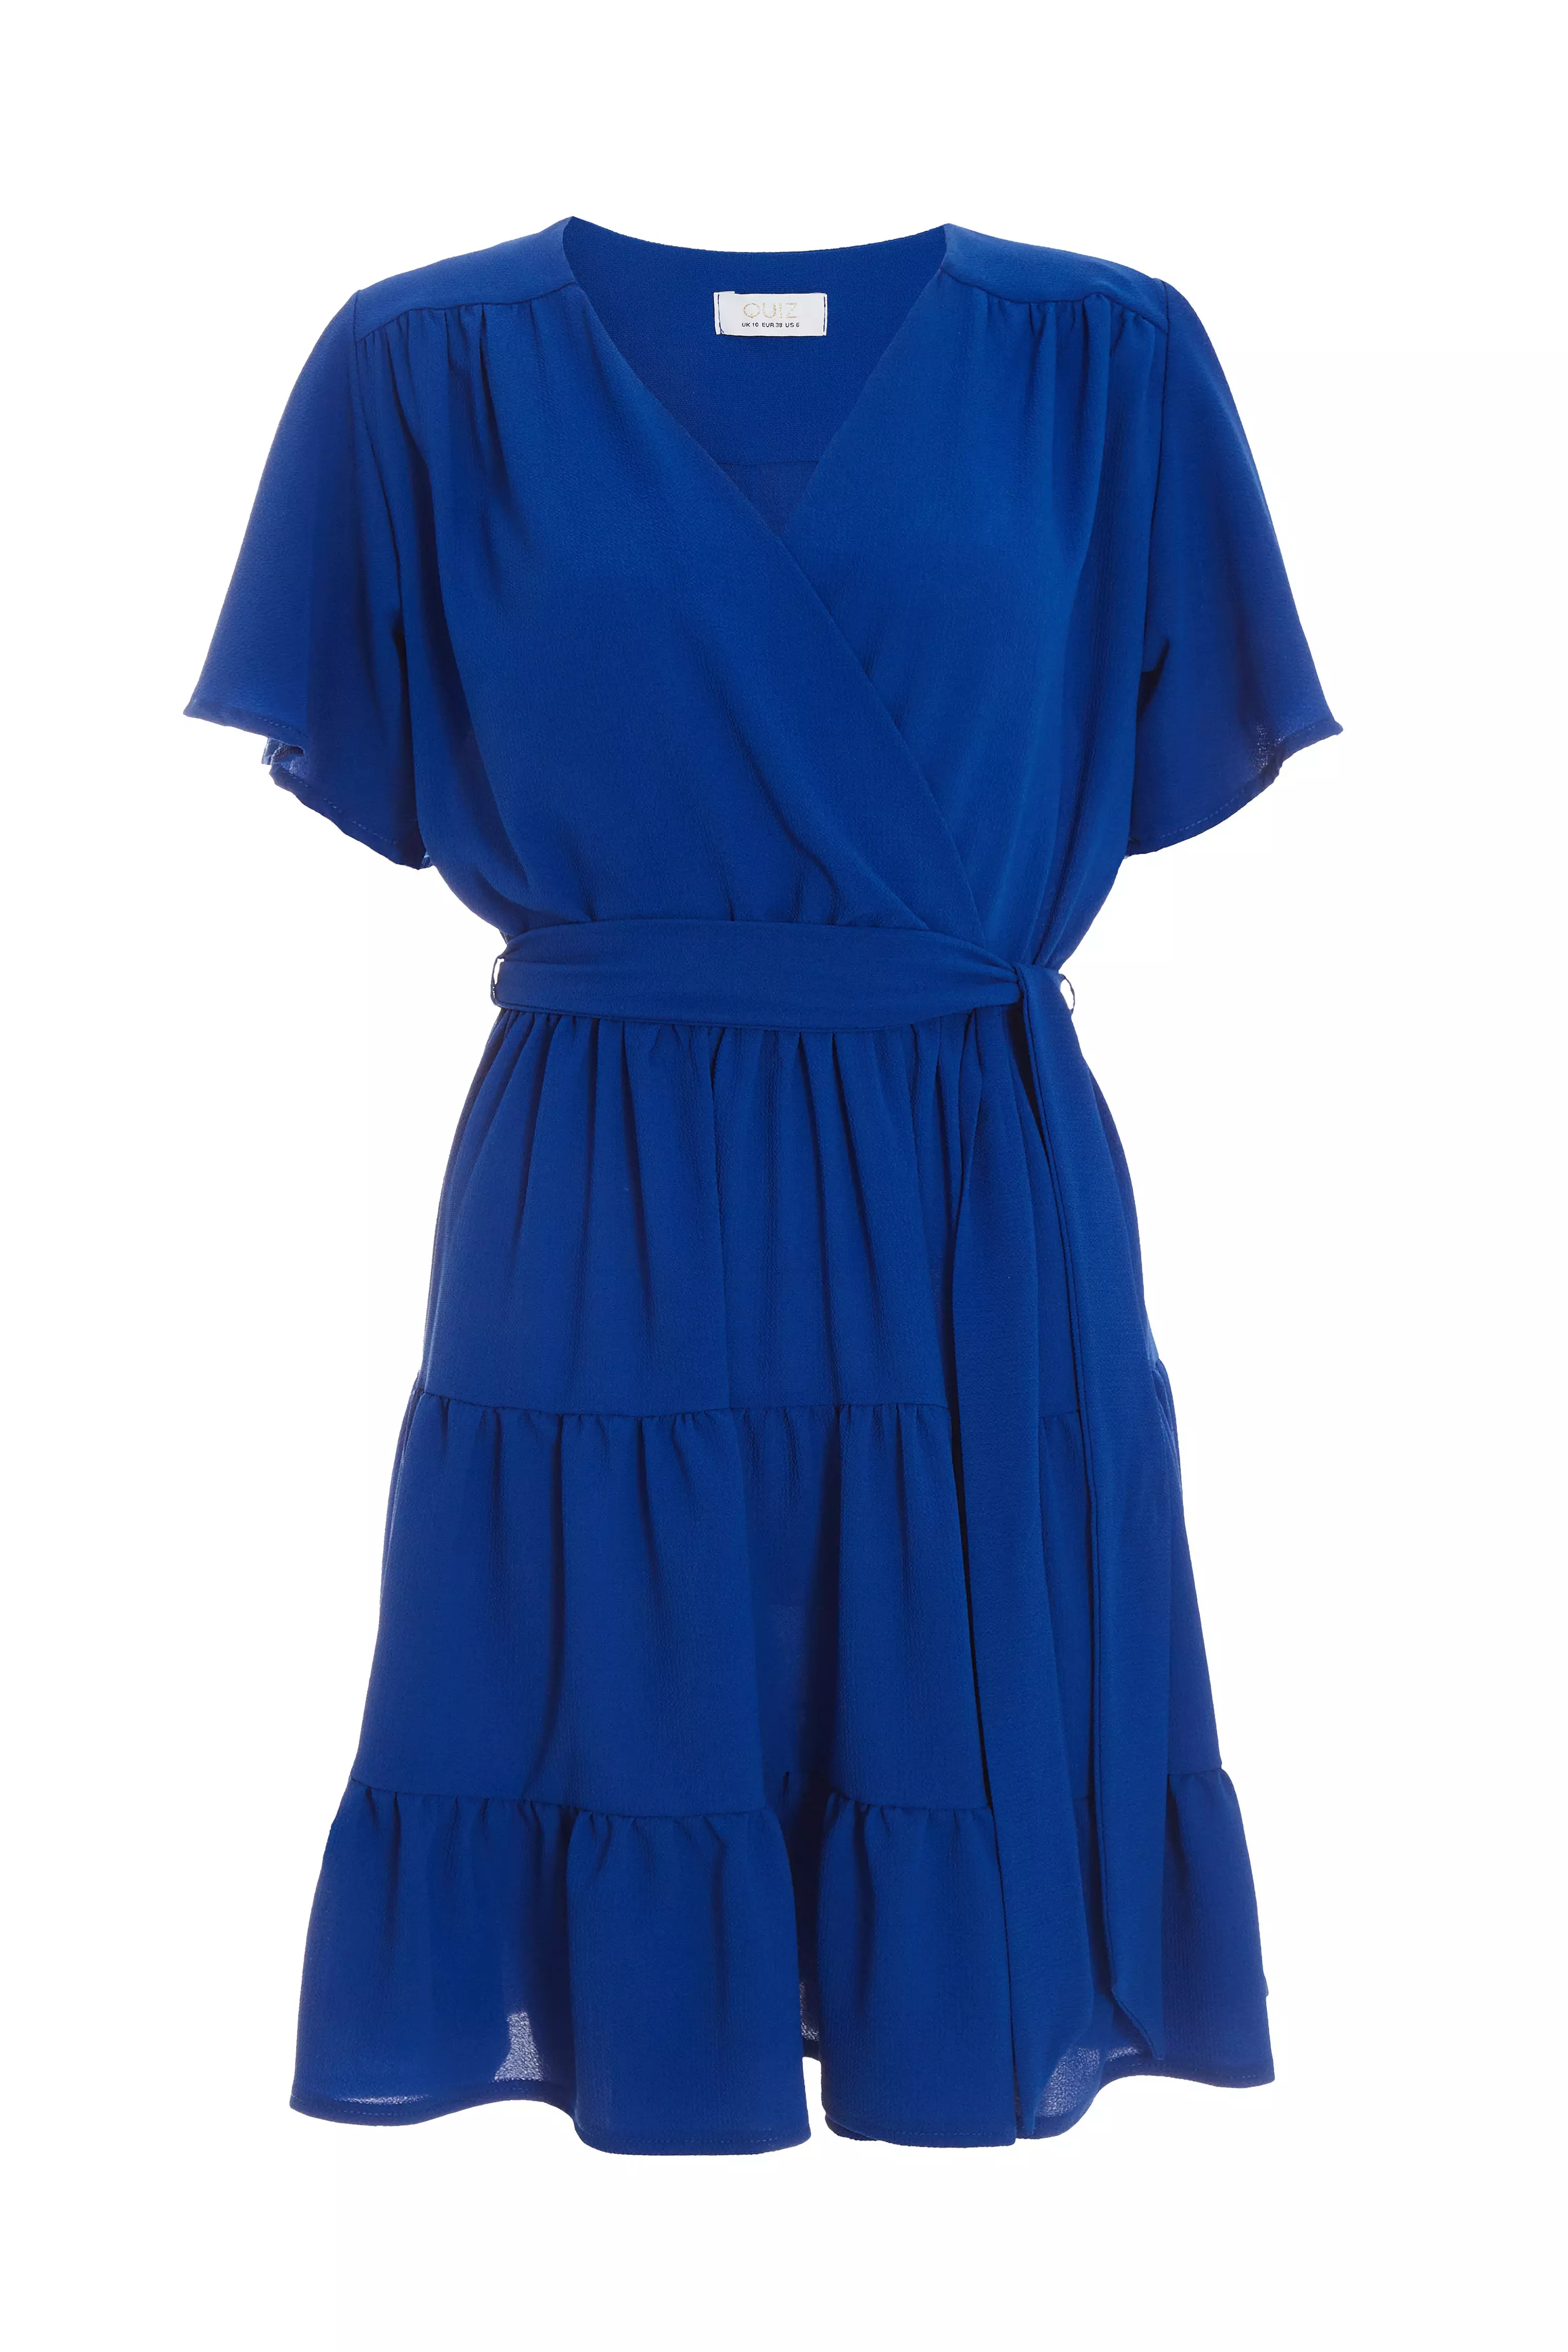 Royal Blue Wrap Skater Dress - QUIZ Clothing